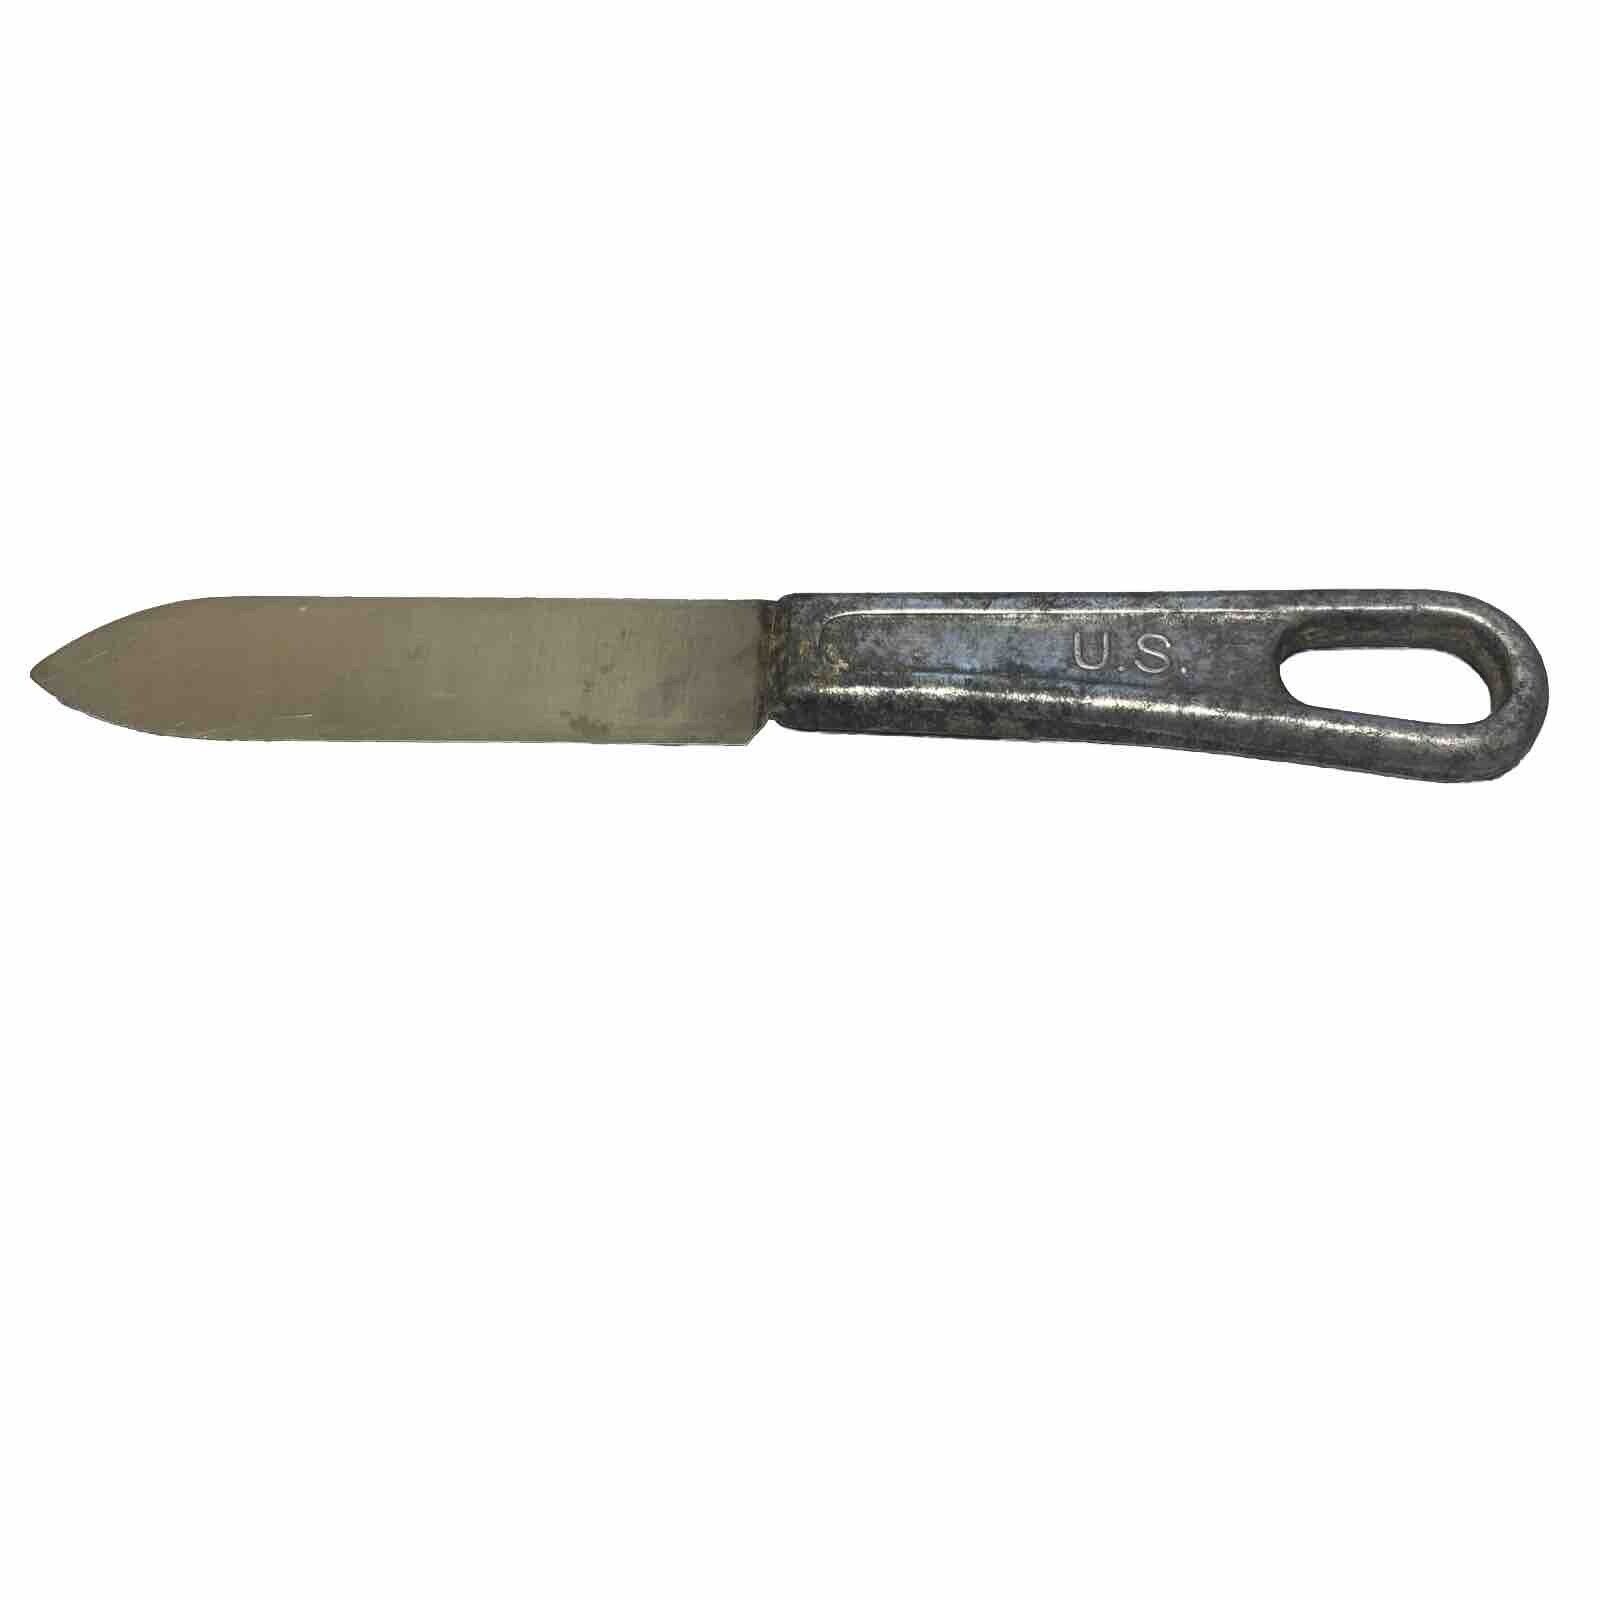 WWII 1945 LF&C US Military Army Navy Mess Kit Knife 3.75” Blade USA 🇺🇸 